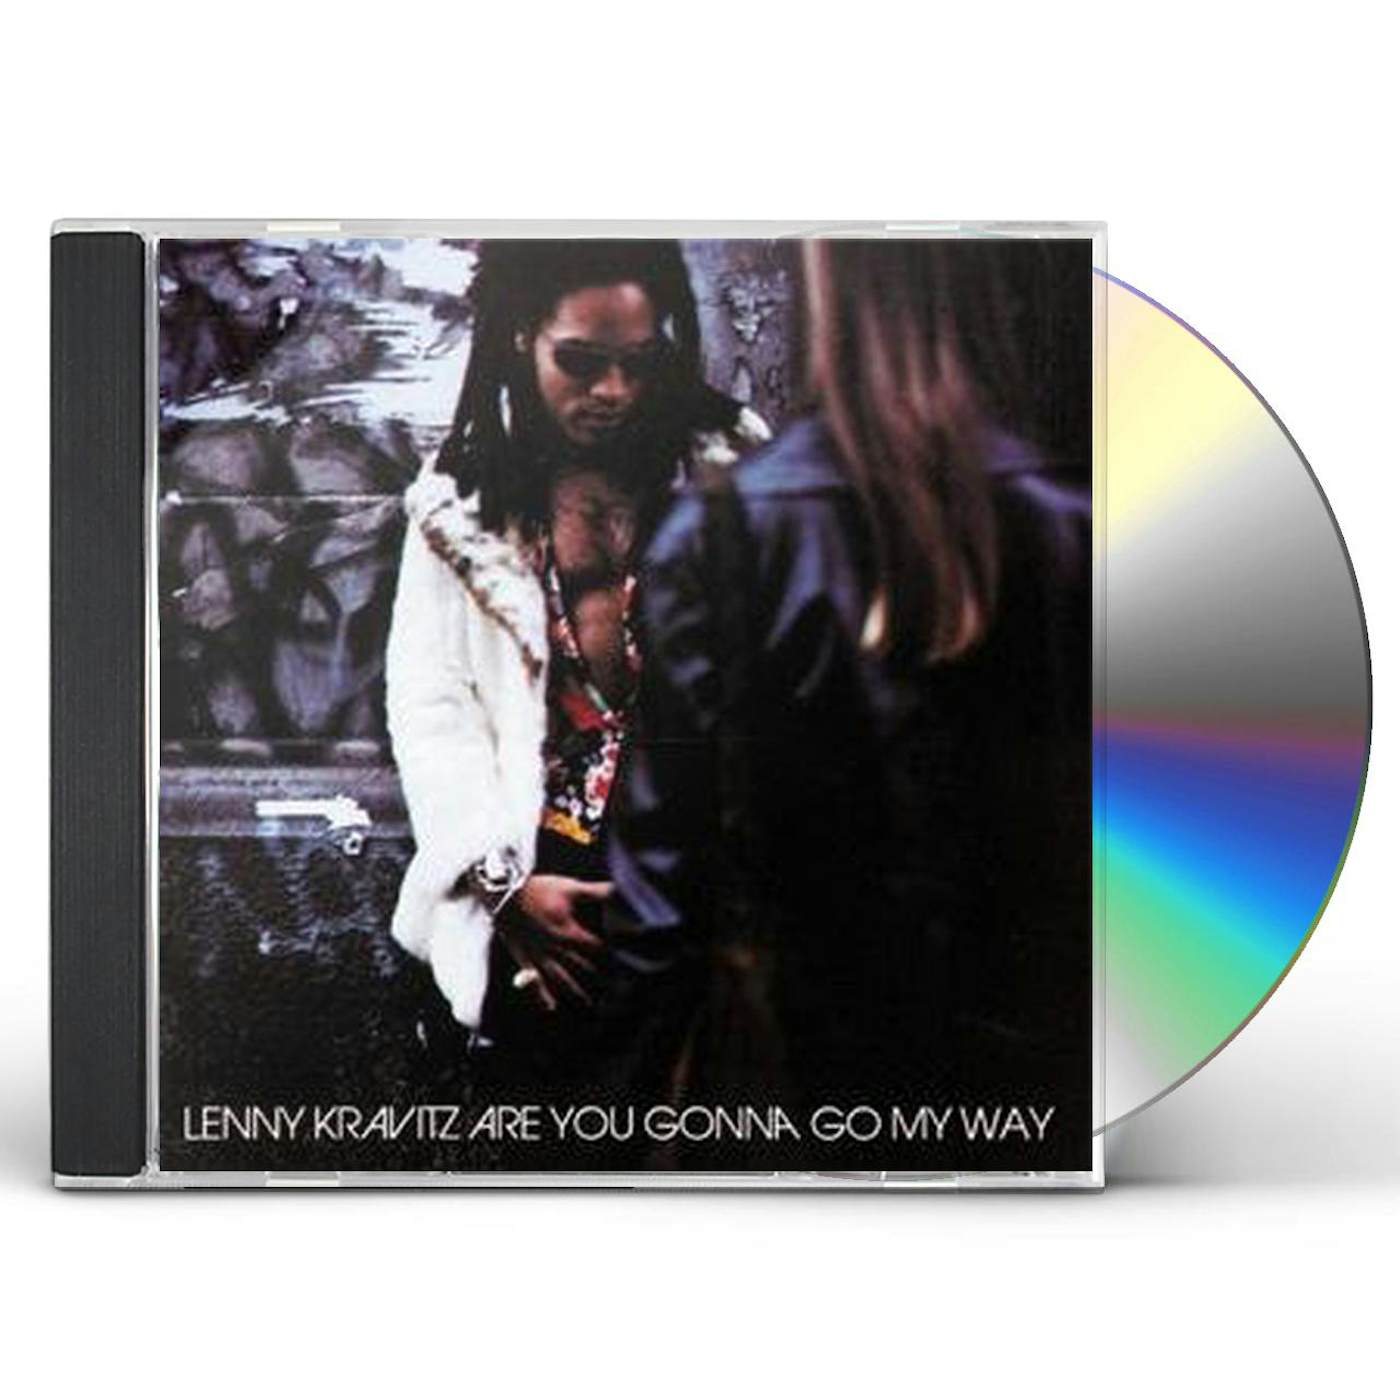 Lenny Kravitz ARE YOU GONNA GO MY WAY? CD